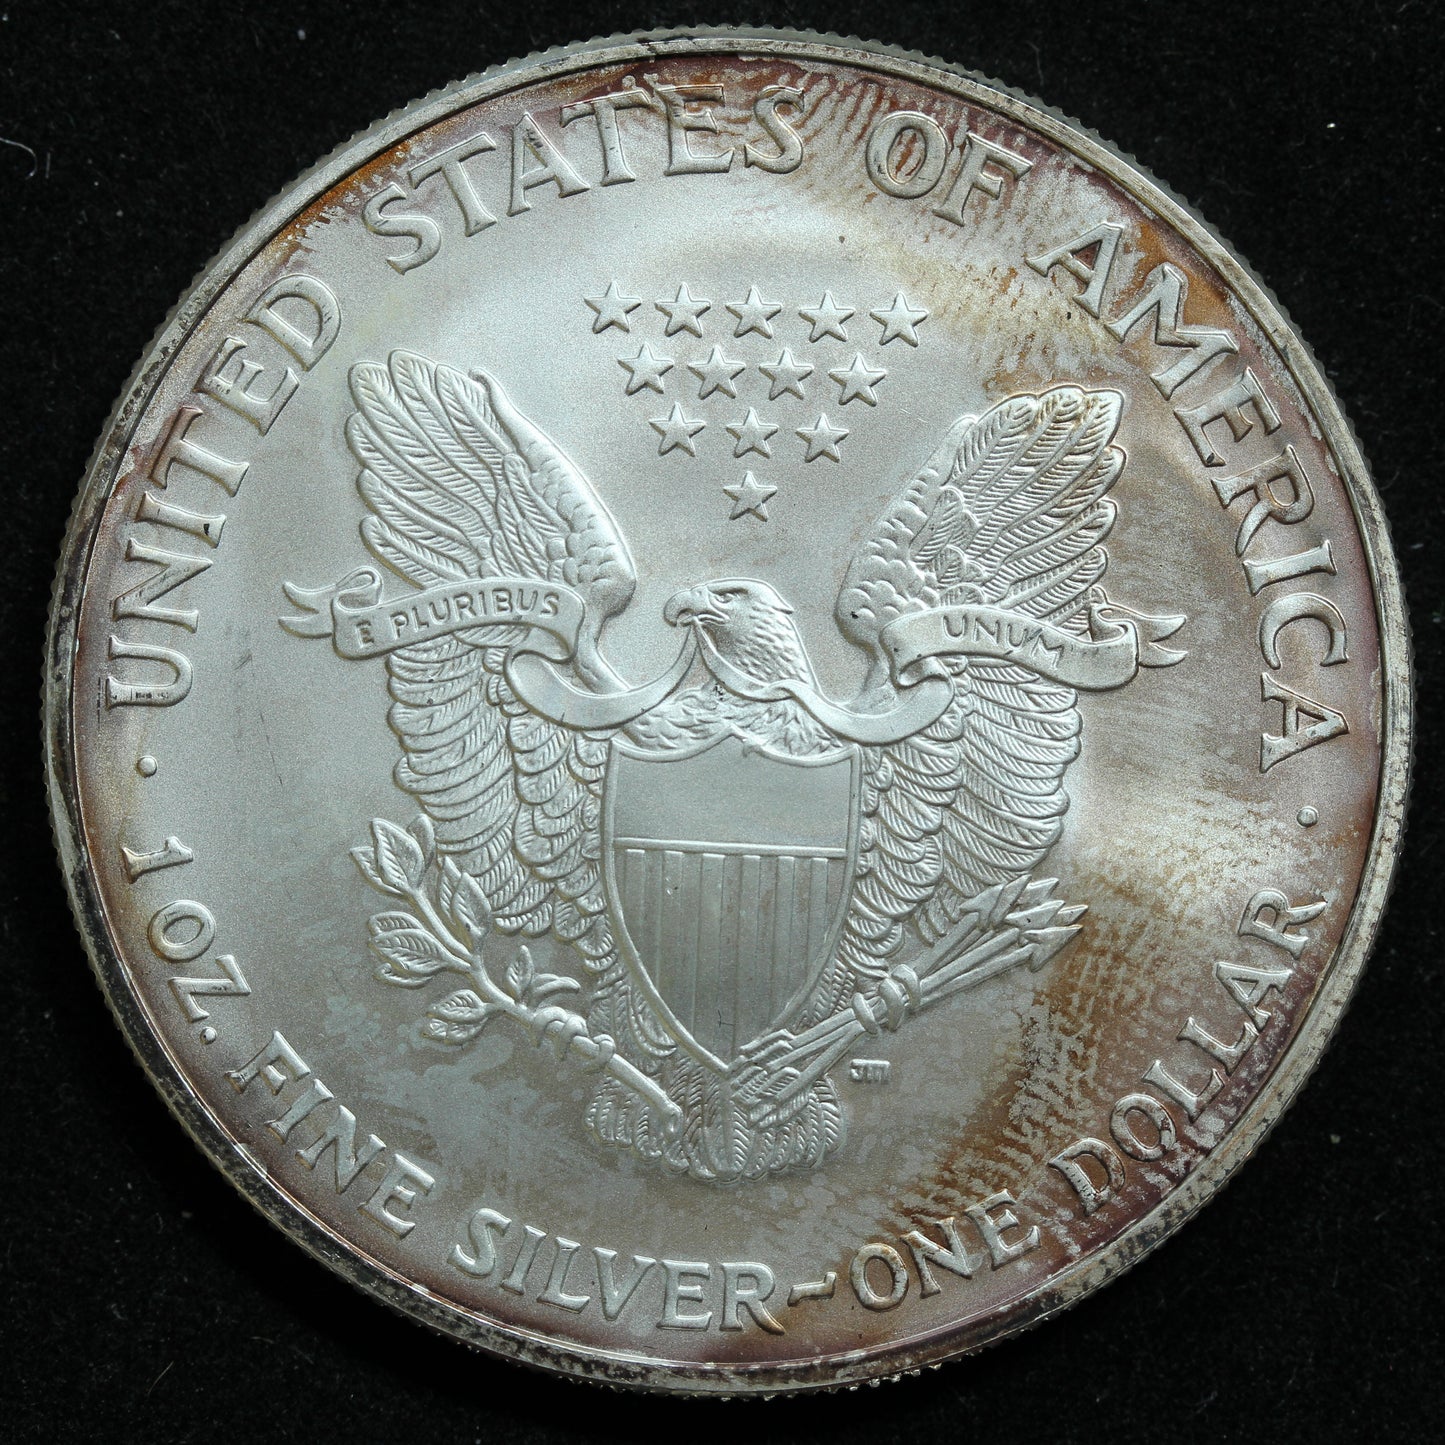 2004 American Silver Eagle $1 Bullion Coin .999 - Crazy Toning!